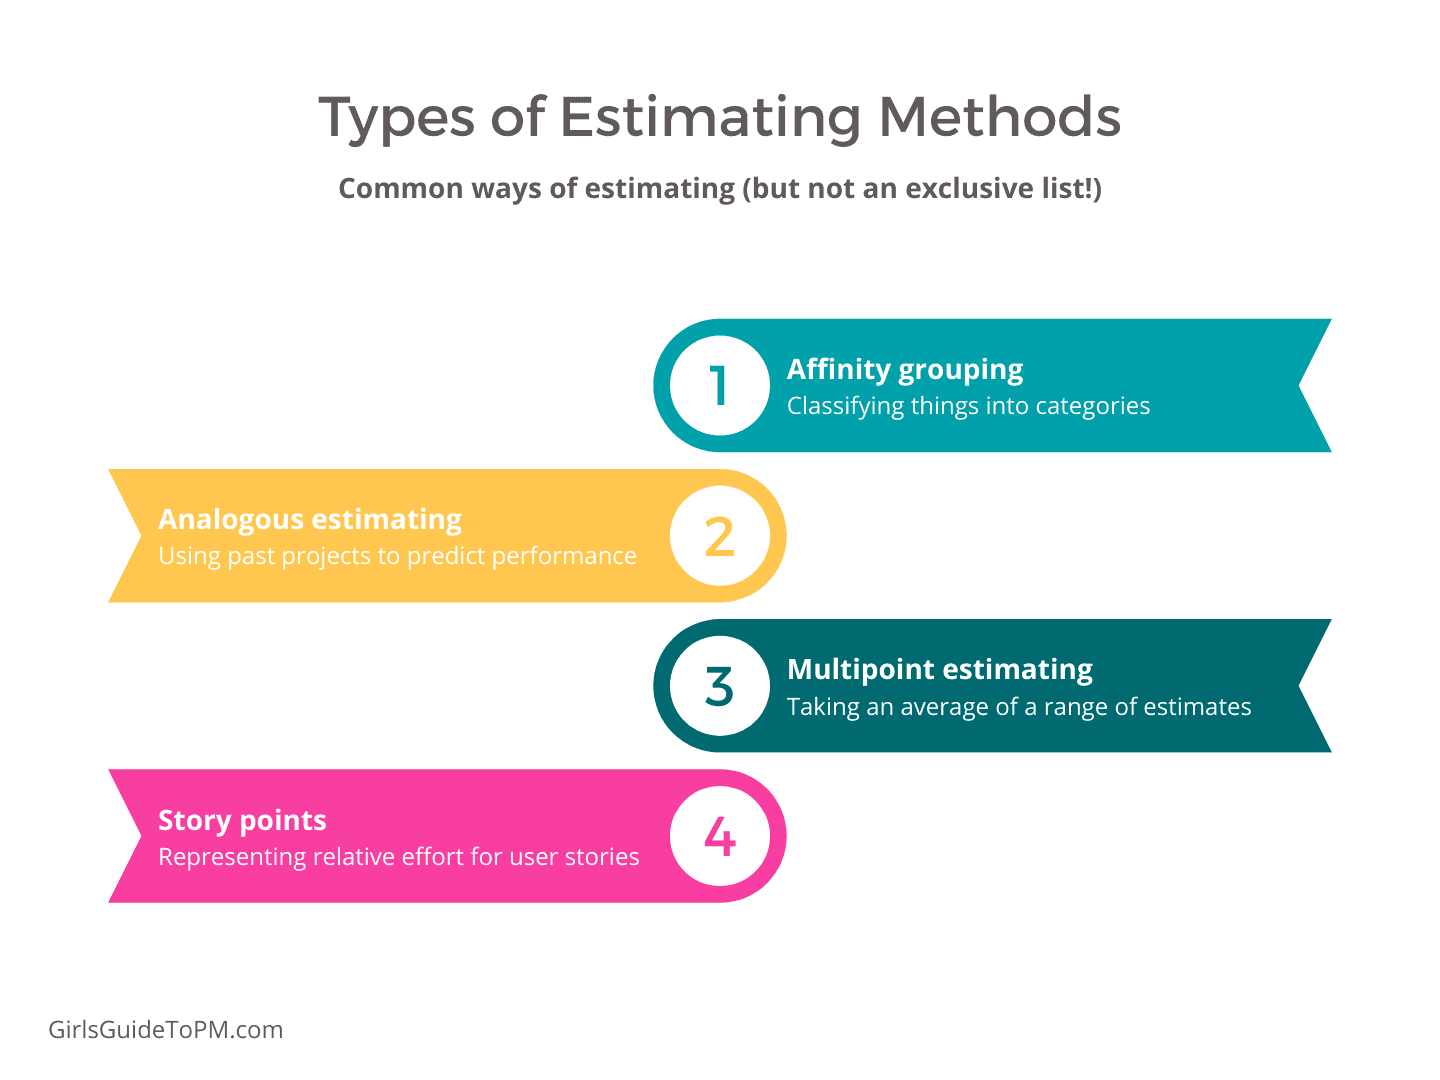 Types of estimating methods - Affinity grouping, analogous estimating, multipoint estimating, story points